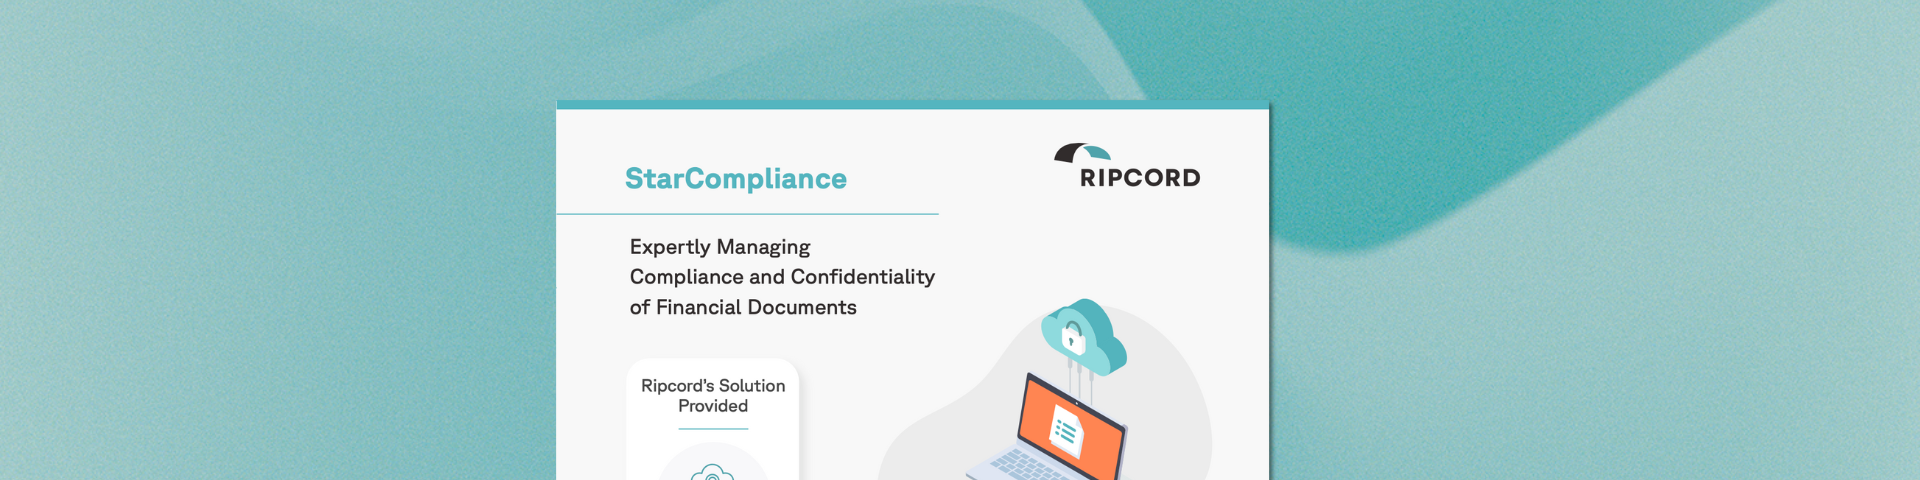 StarCompliance Case Study - Ripcord